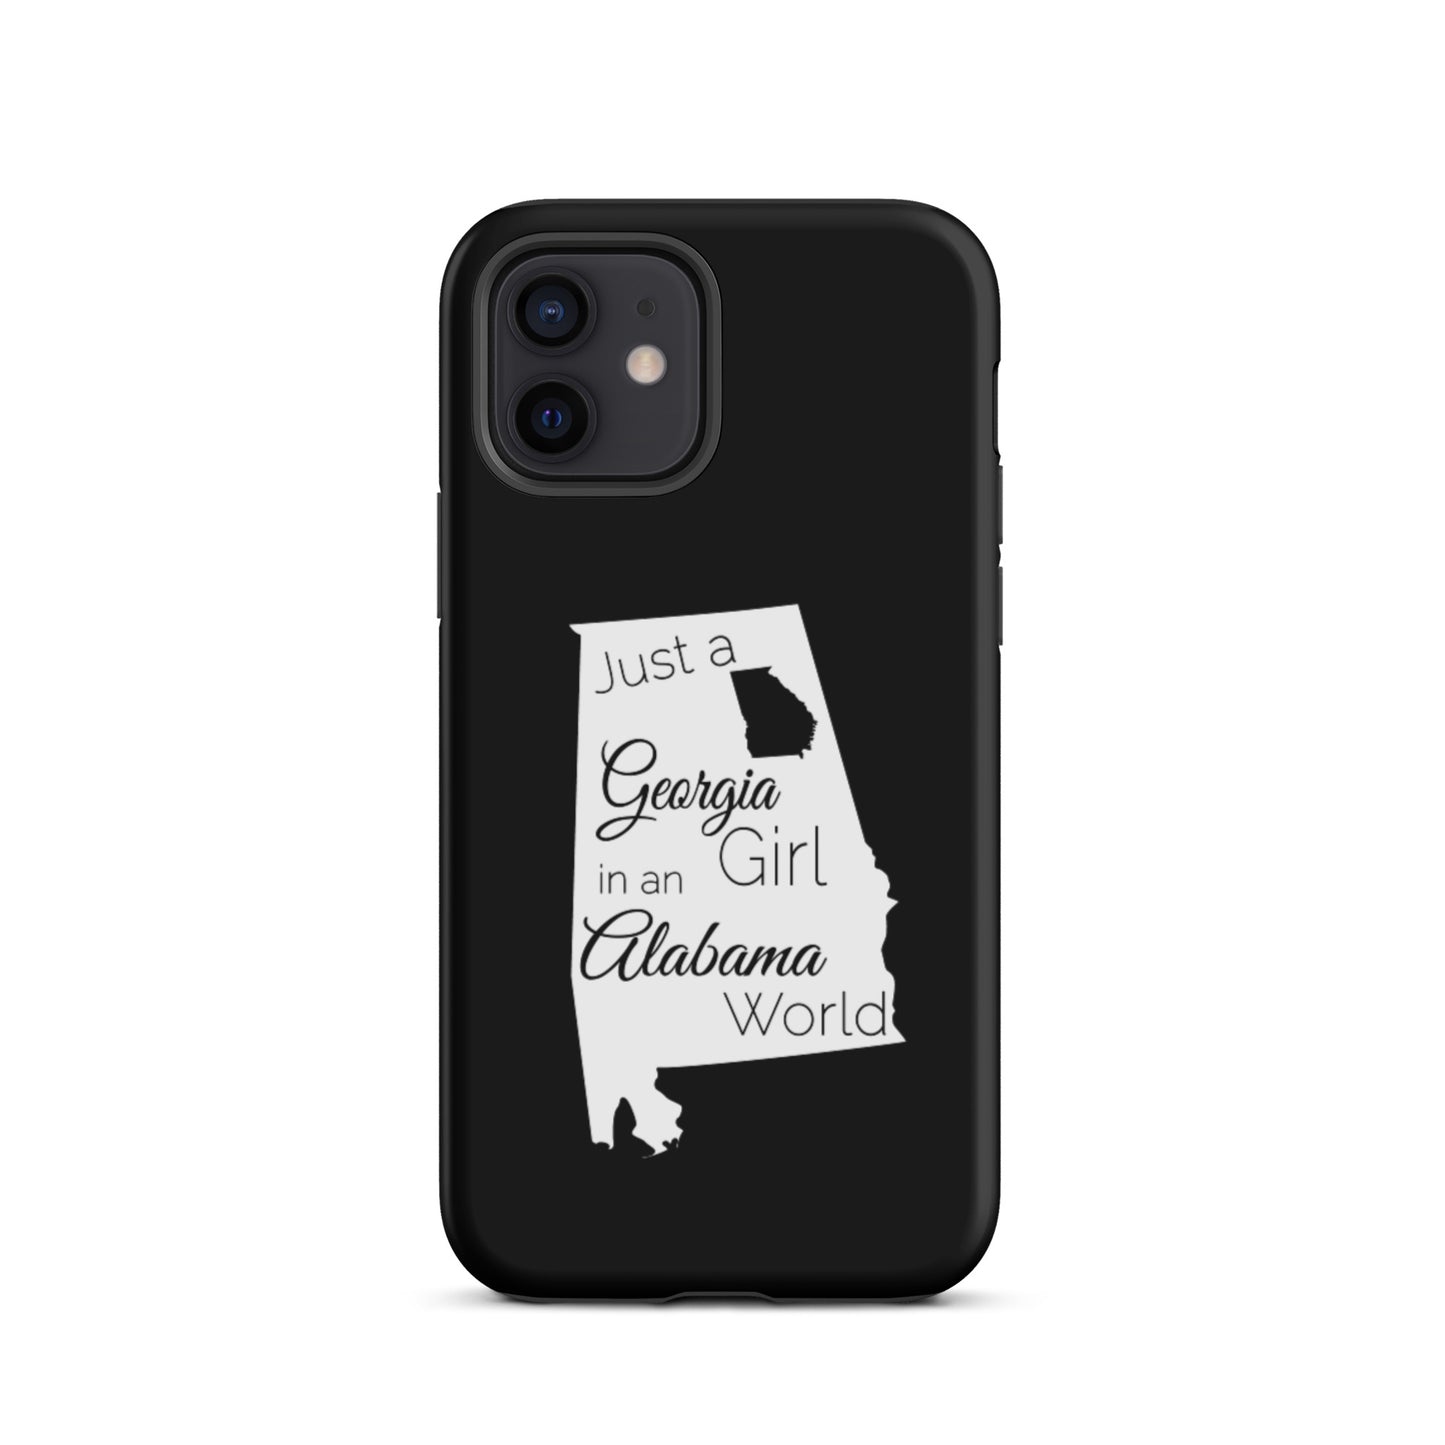 Just a Georgia Girl in an Alabama World Tough iPhone case